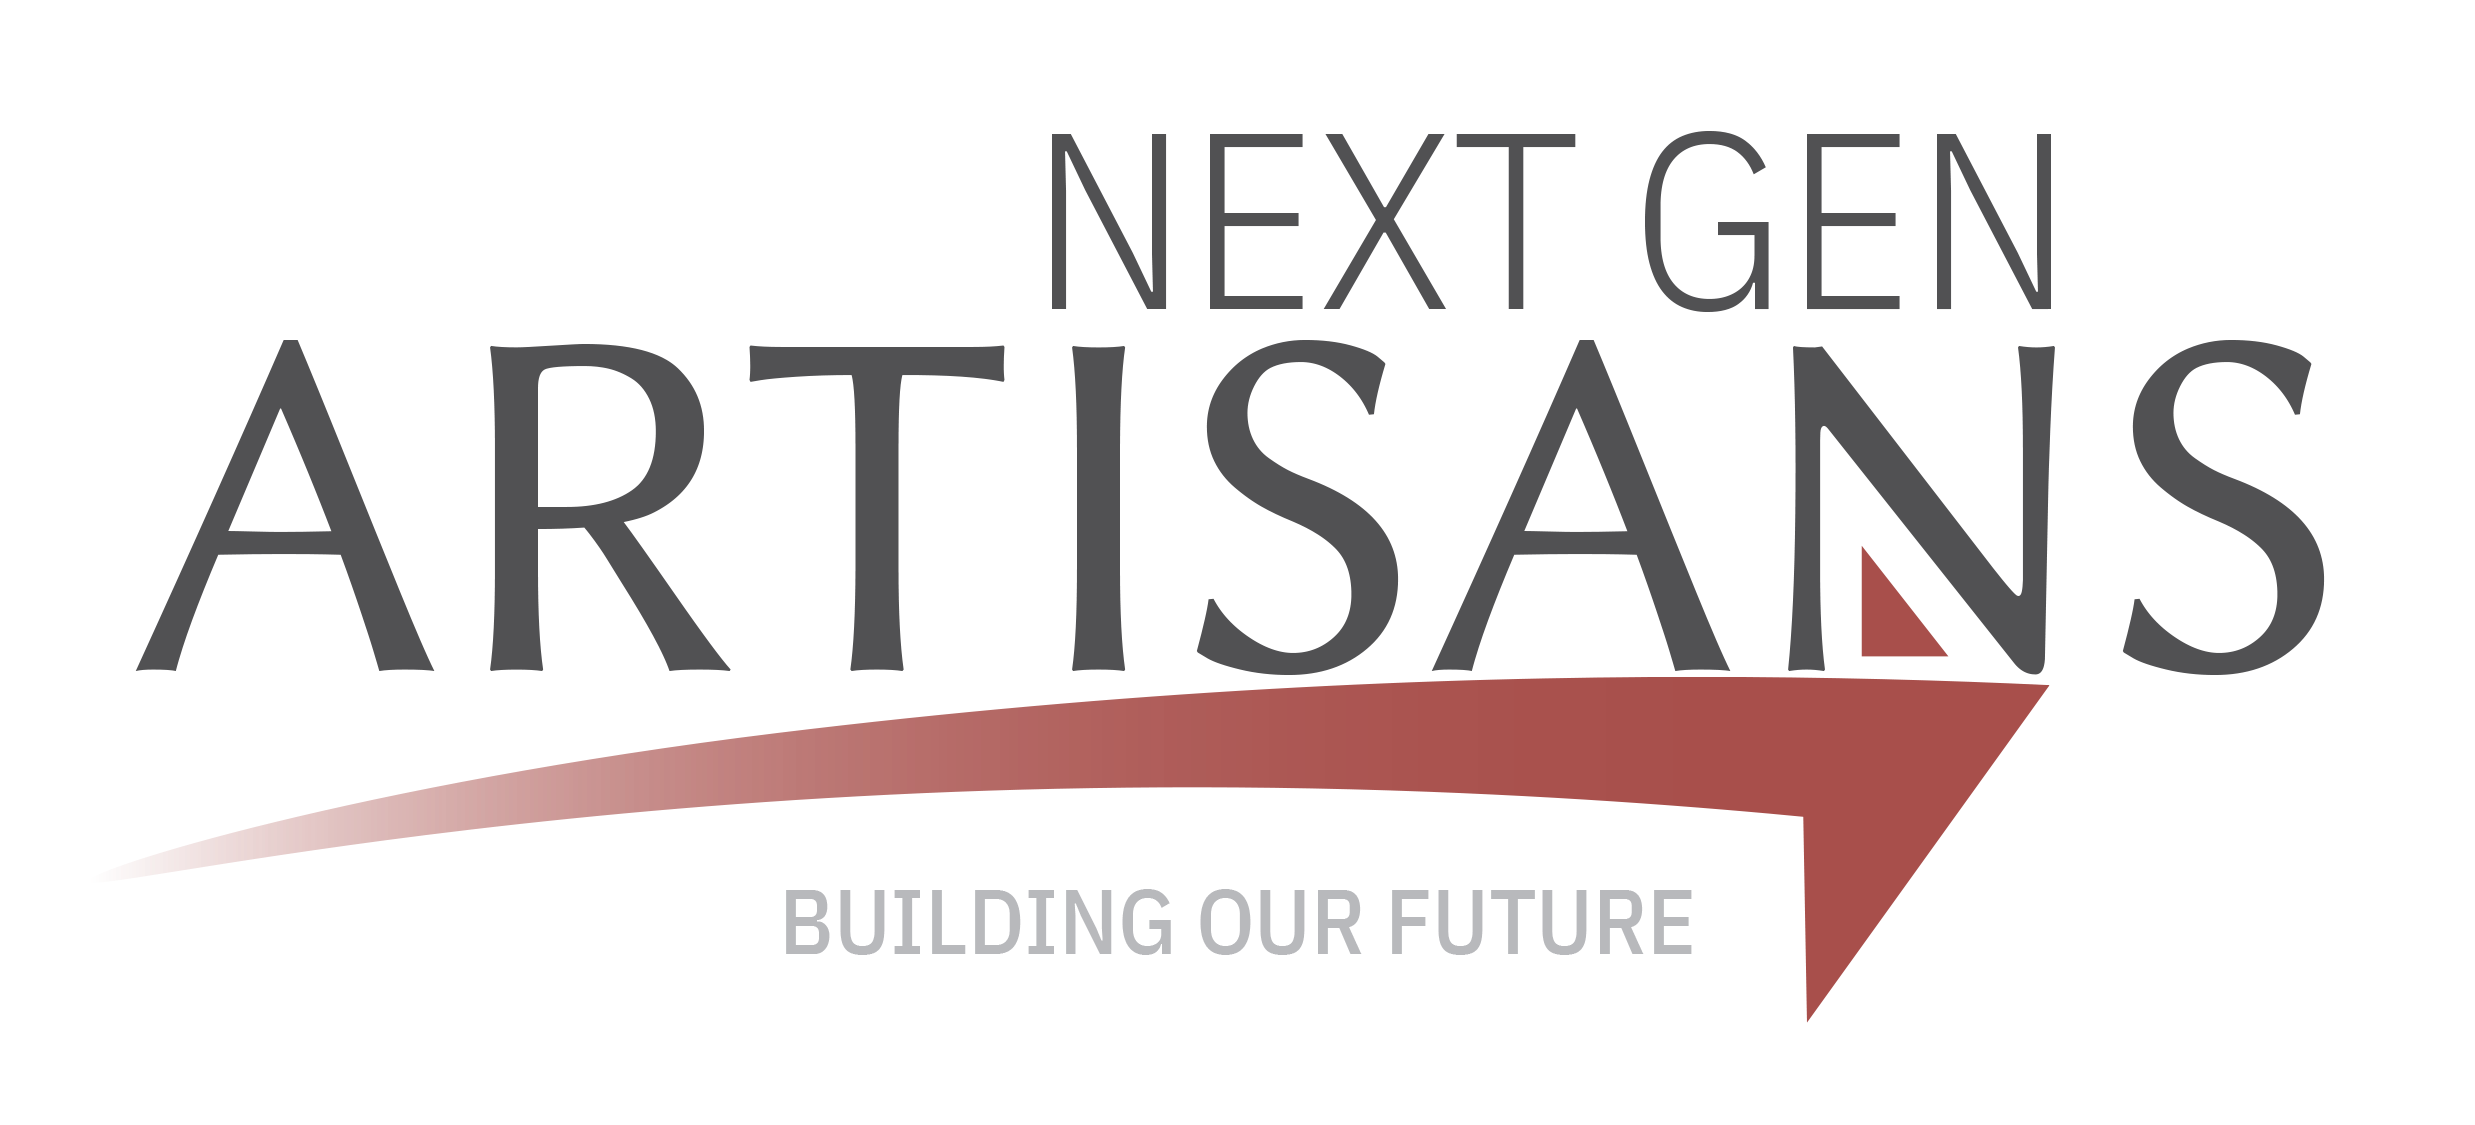 Next Generation Artisans LLC